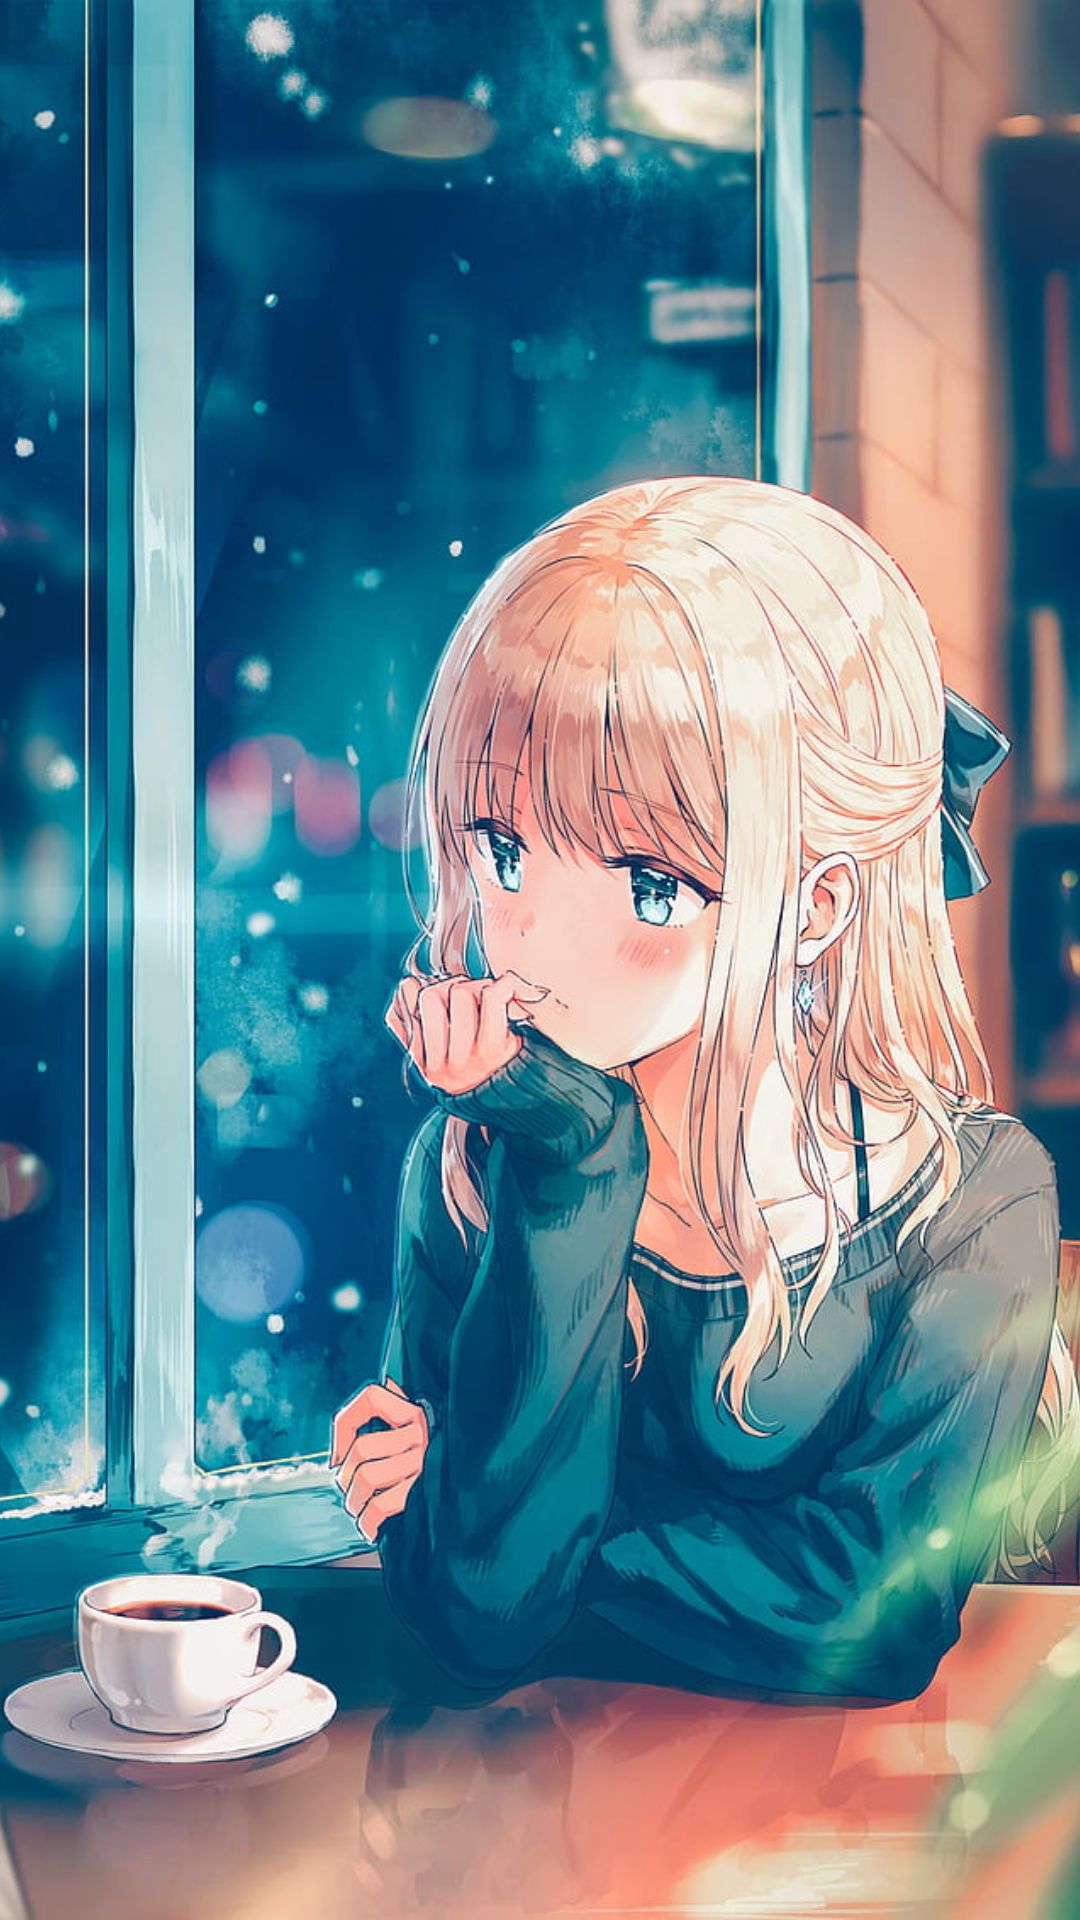 Cute Anime Girl Wallpaper- Top Best Quality Cute Anime Girl Background (HD, 4k)